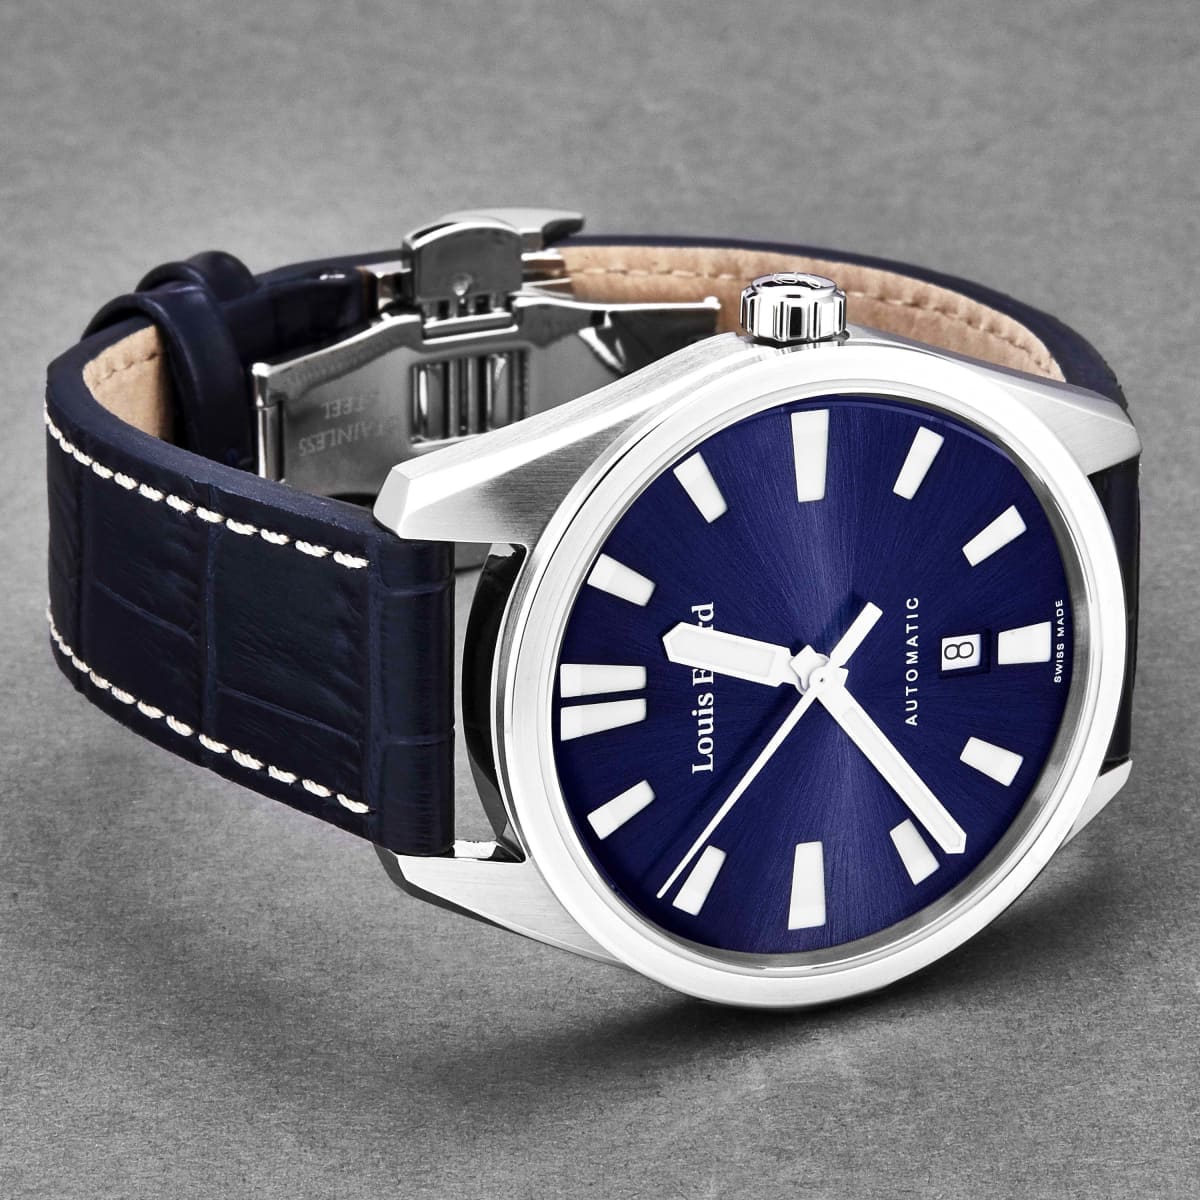 Louis Erard Men’s ’Sportive’ Blue Dial Leather Strap Automatic Watch 69108AA05.BDC155 - On sale